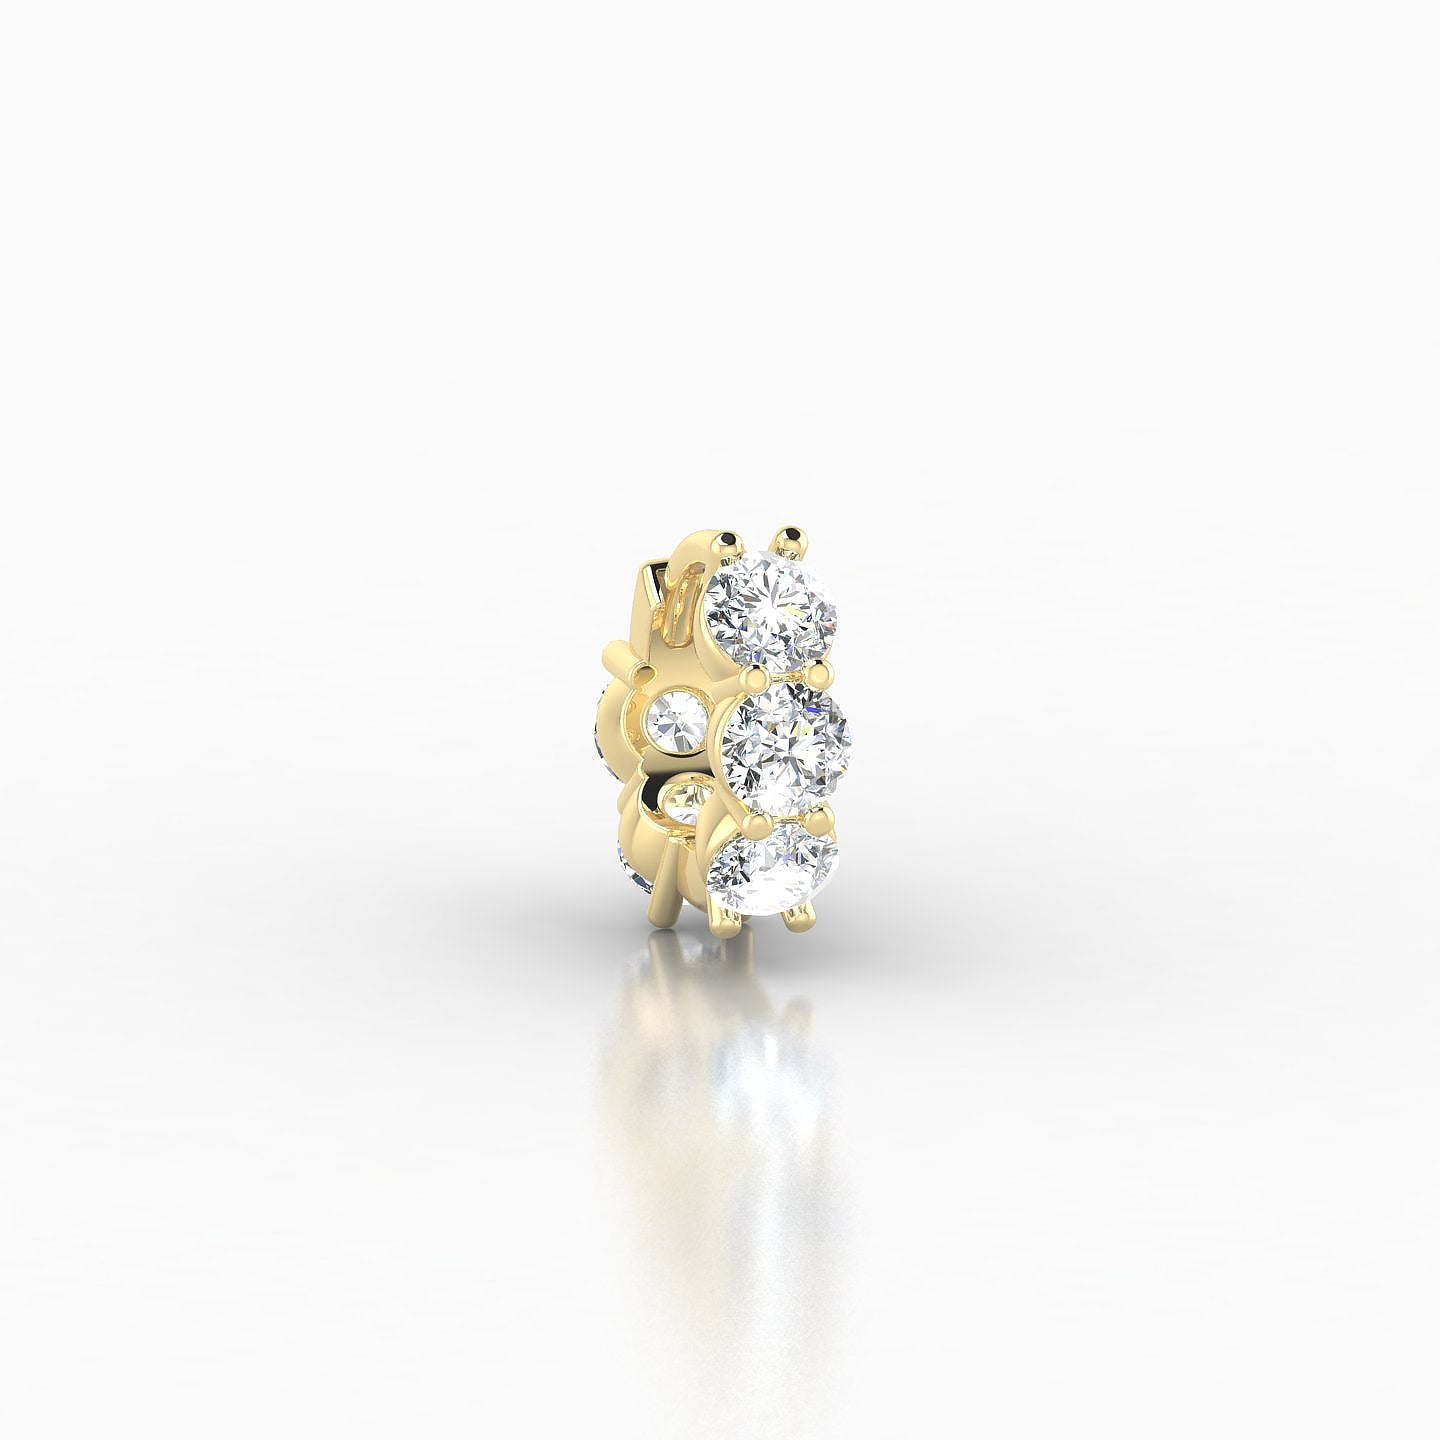 Diana | 18k Yellow Gold 5 mm Diamond Hoop Piercing